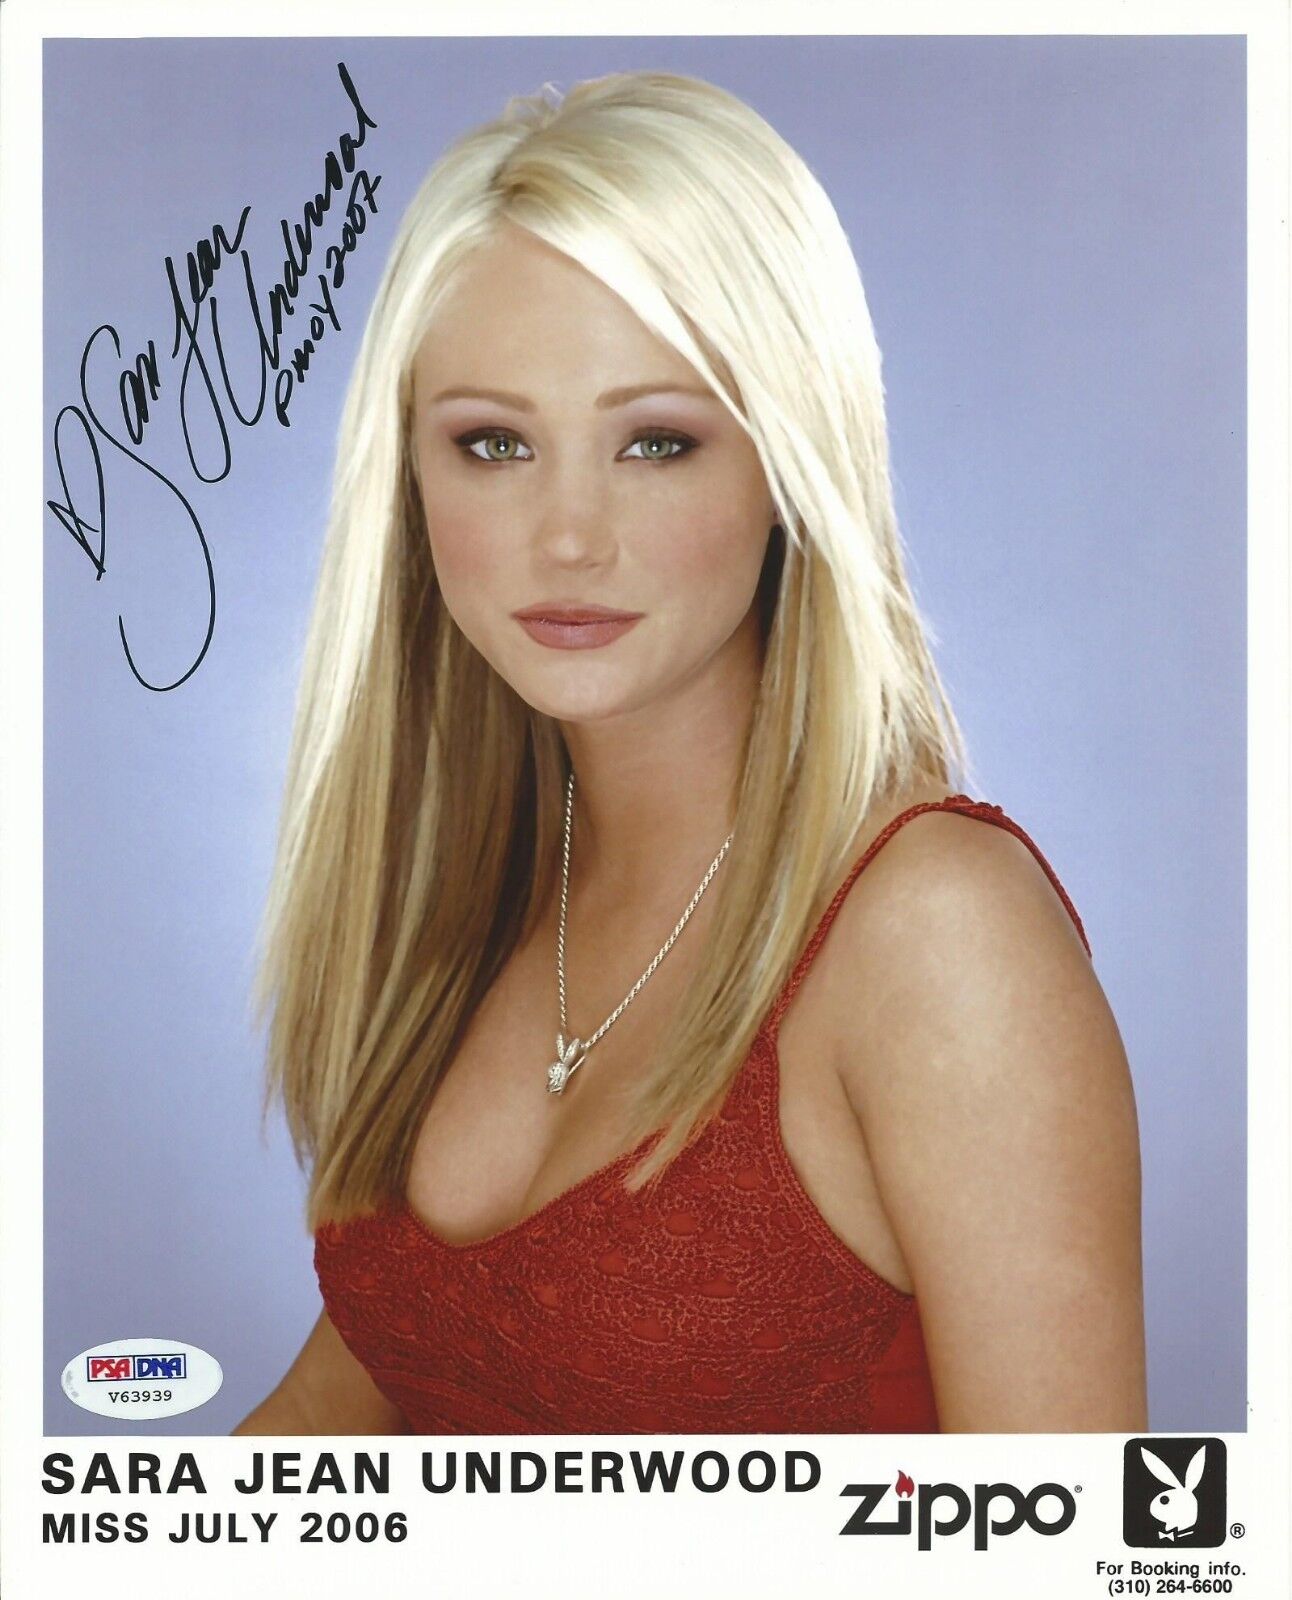 Sara Jean Underwood Signed Playboy 8x10 Photo Poster painting PSA/DNA COA July 2006 Headshot '07